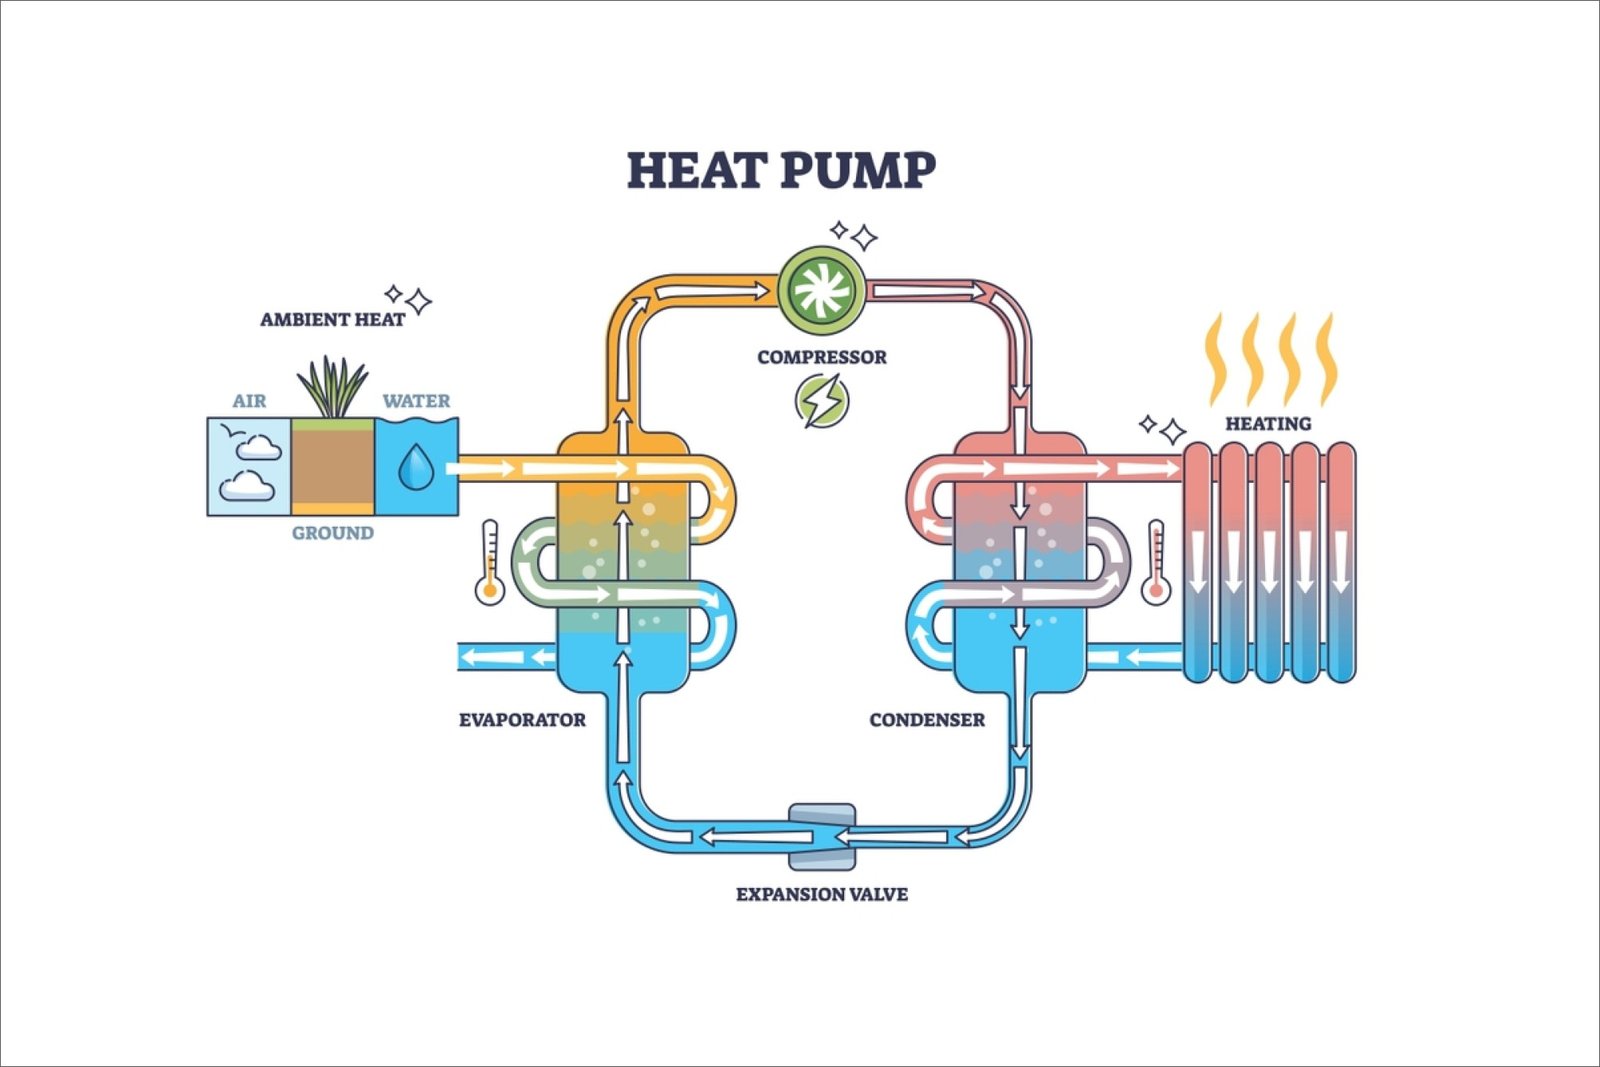 Top 6 Companies in Global Heat Pump Market 